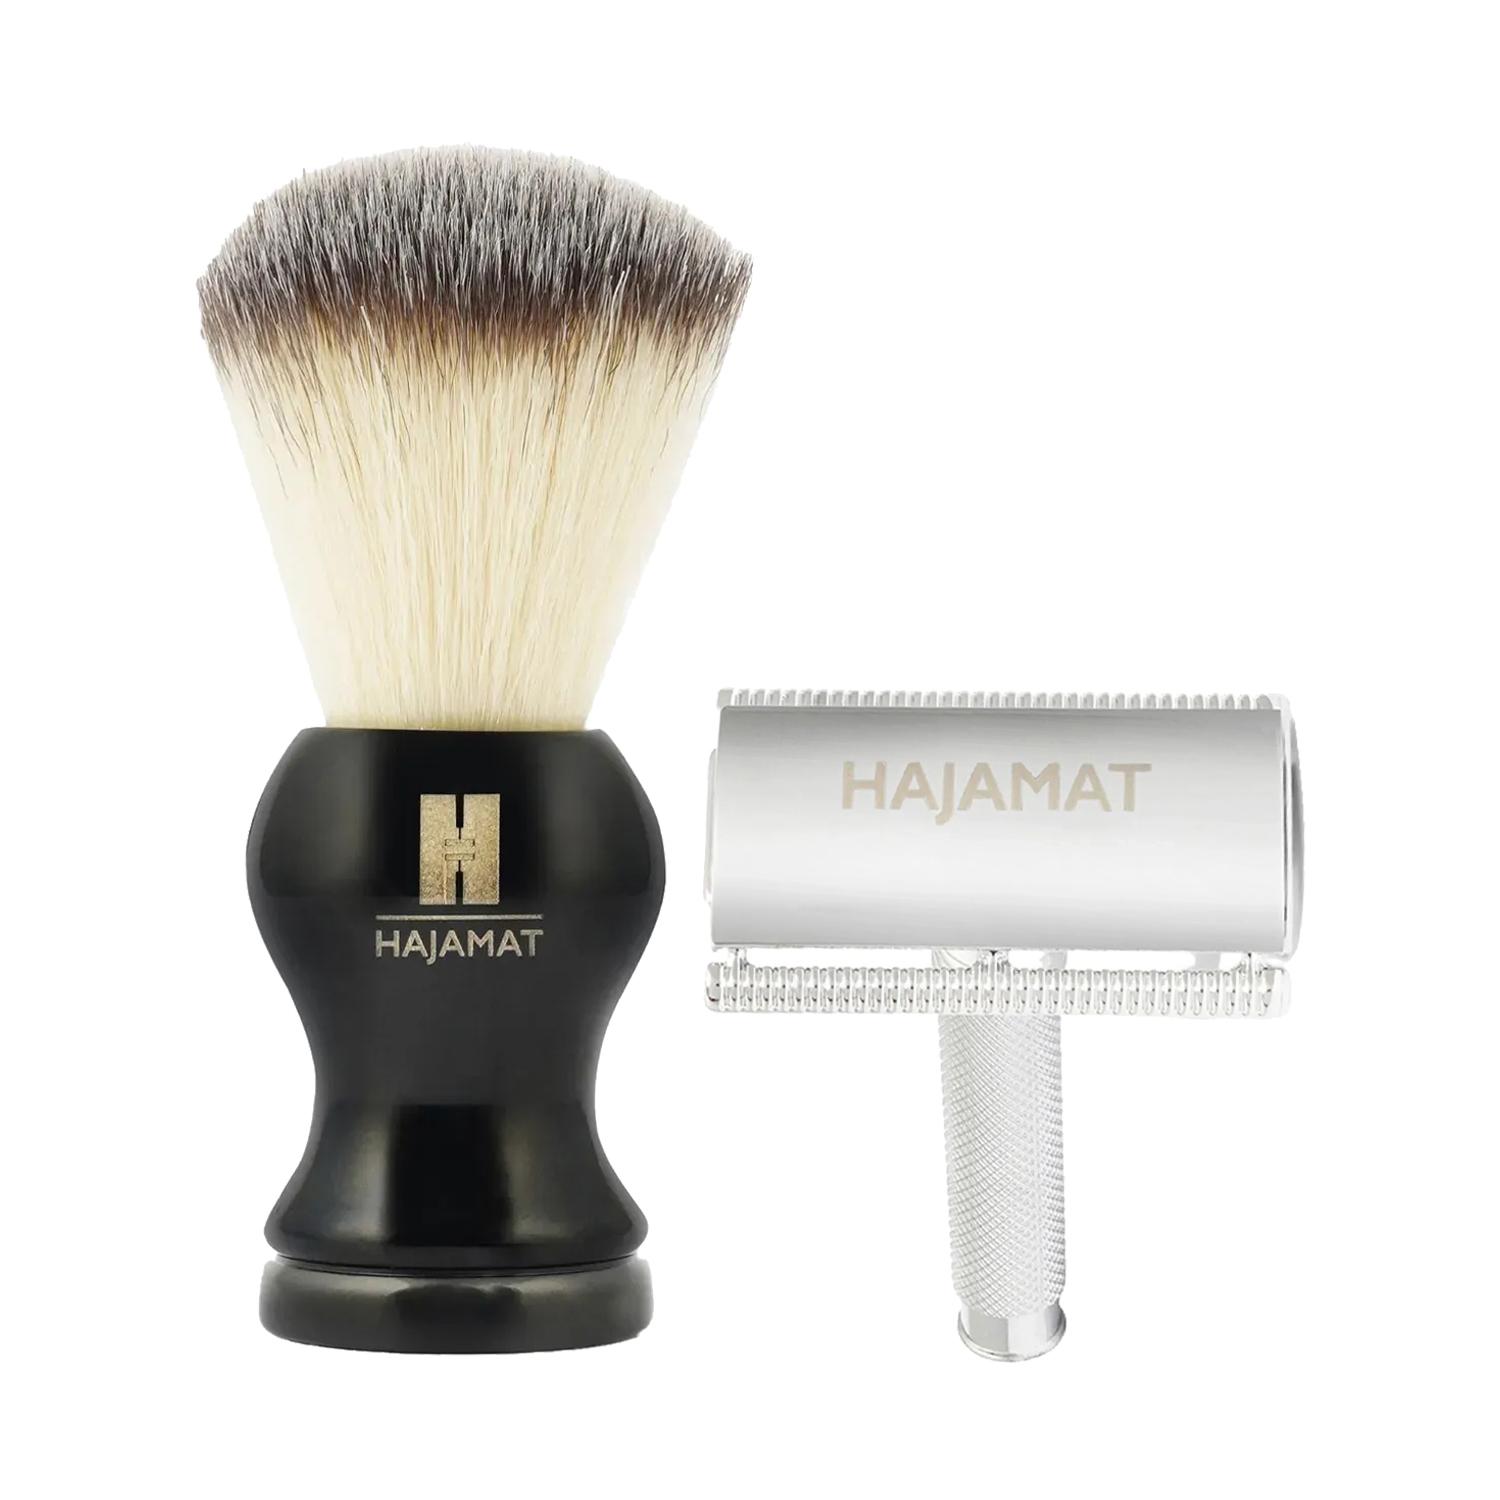 Hajamat | Hajamat Luxurious Black With Imitation Badger Hair Shaving Brush & Spade Safety Razor Combo